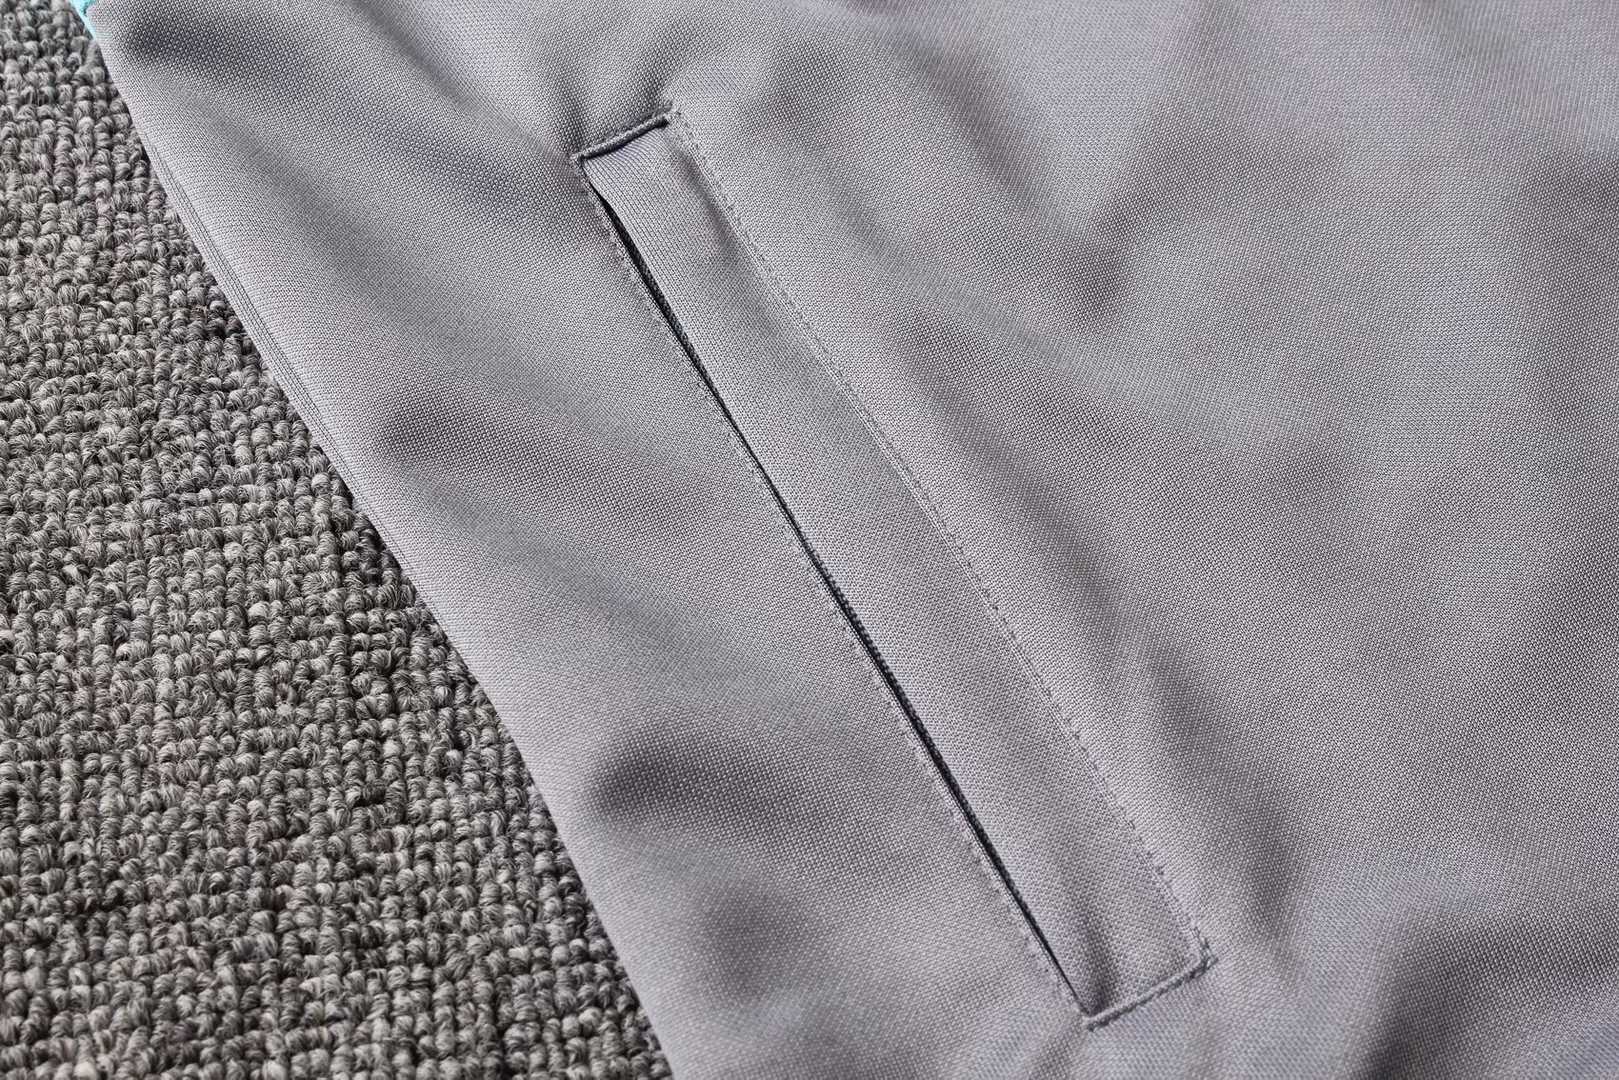 2019/20 Barcelona High Neck Light Grey Mens Soccer Training Suit(Jacket + Pants)